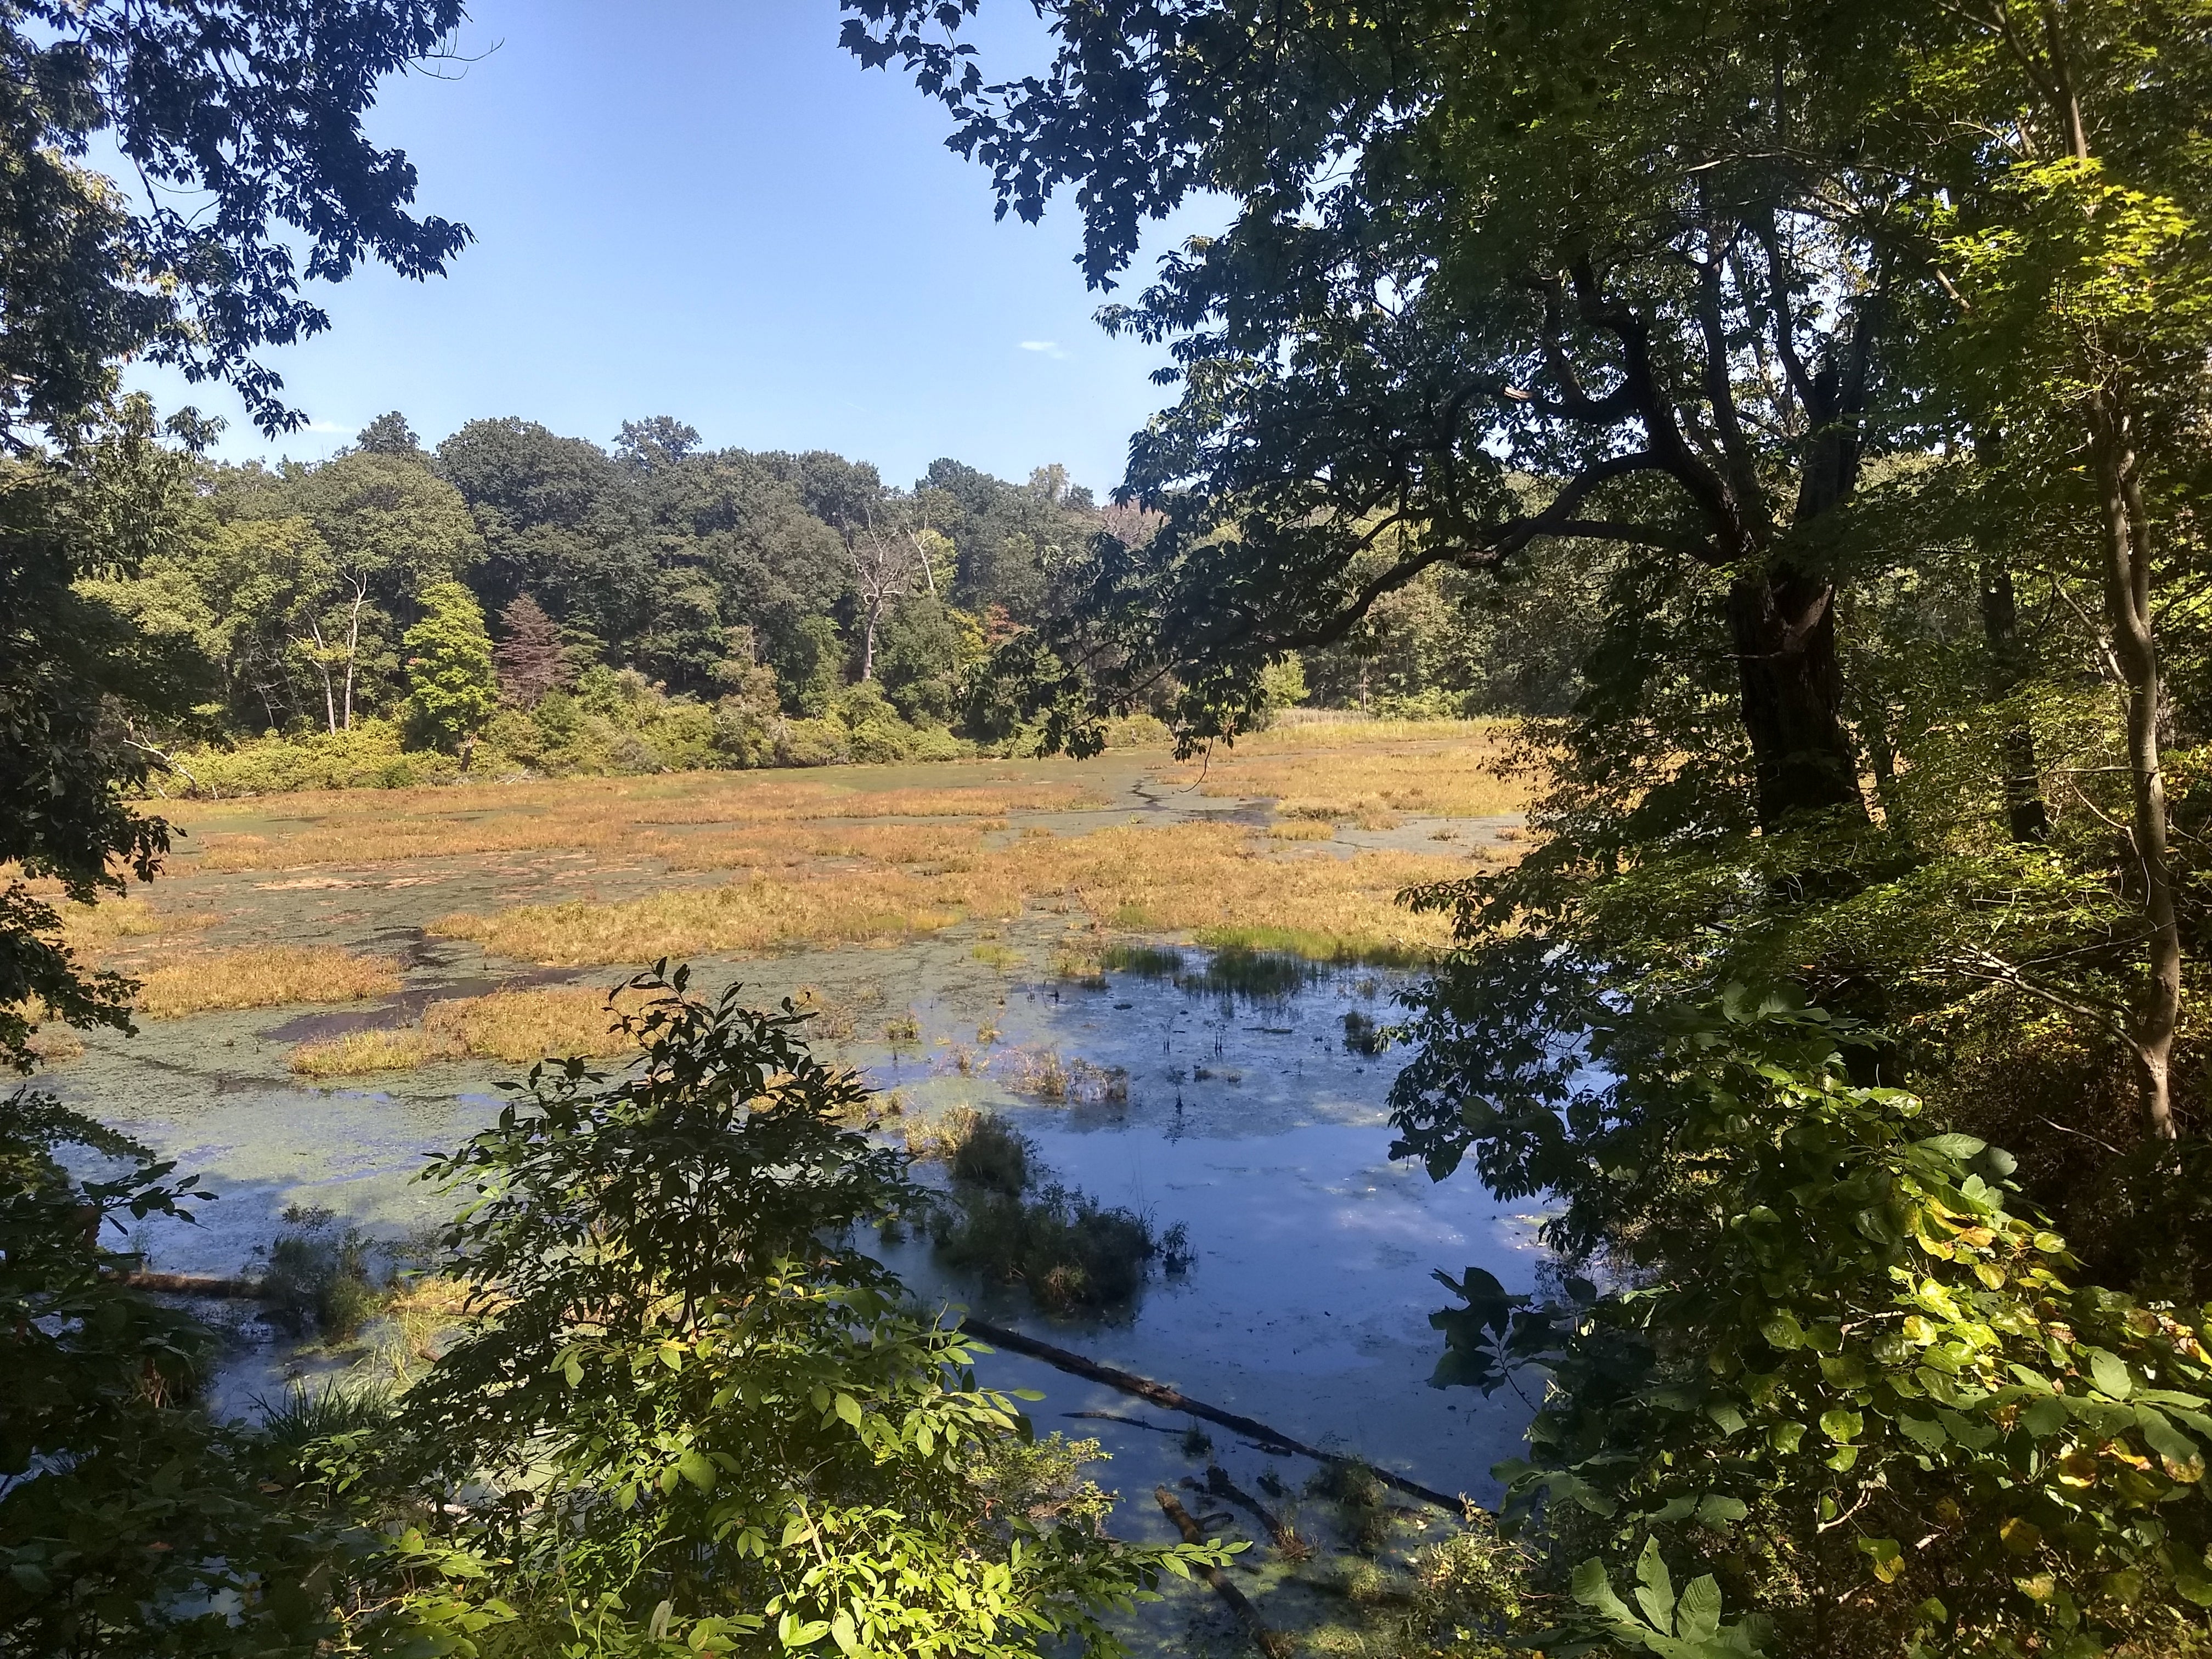 Views from Beaver Marsh Trail